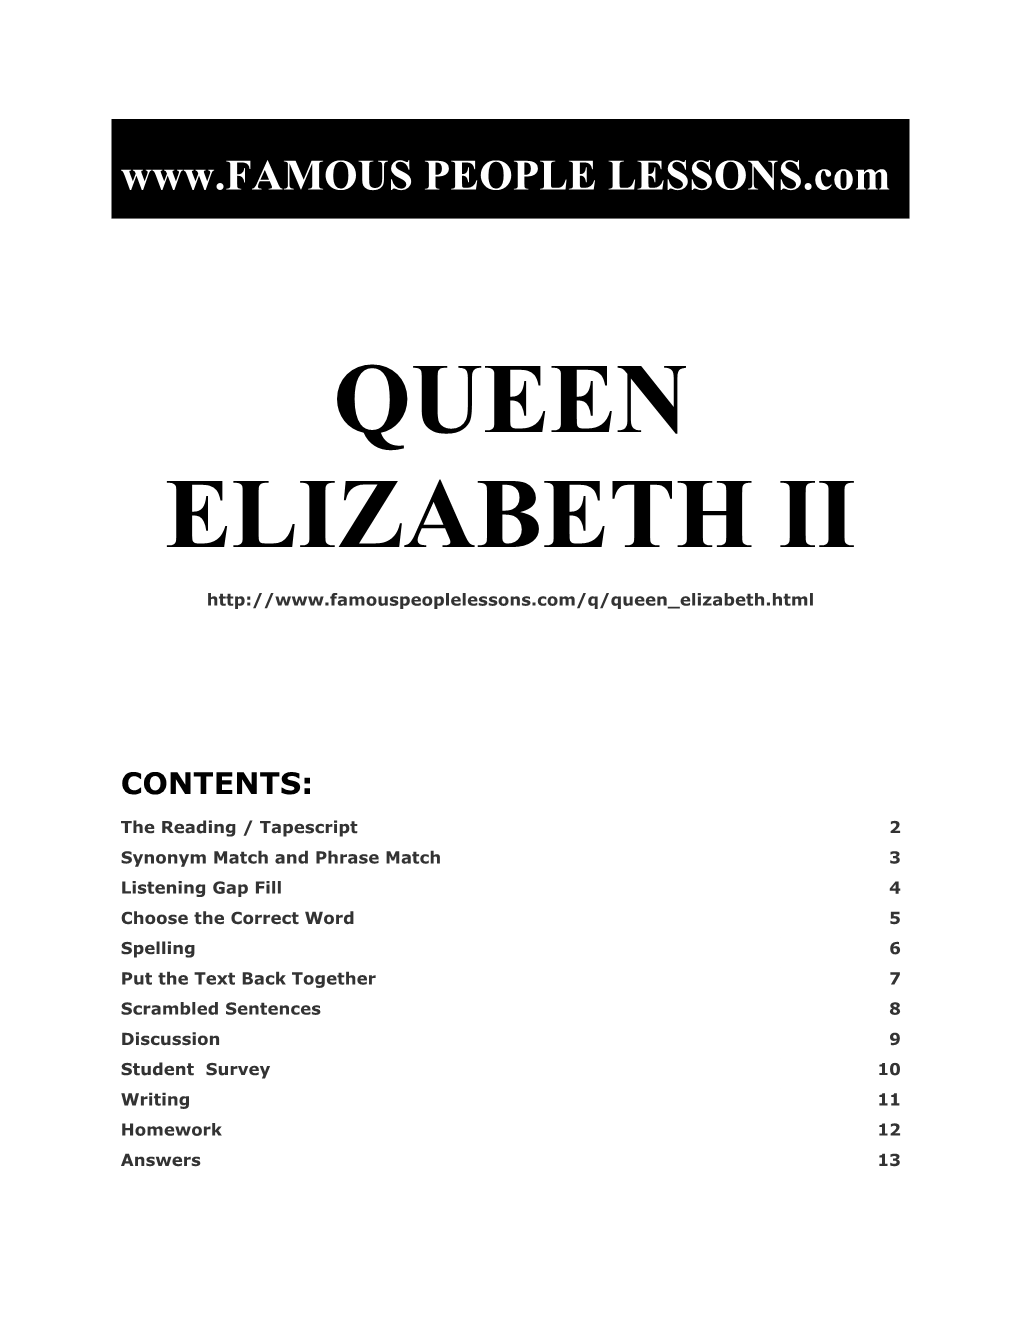 Famous People Lessons - Queen Elizabeth II